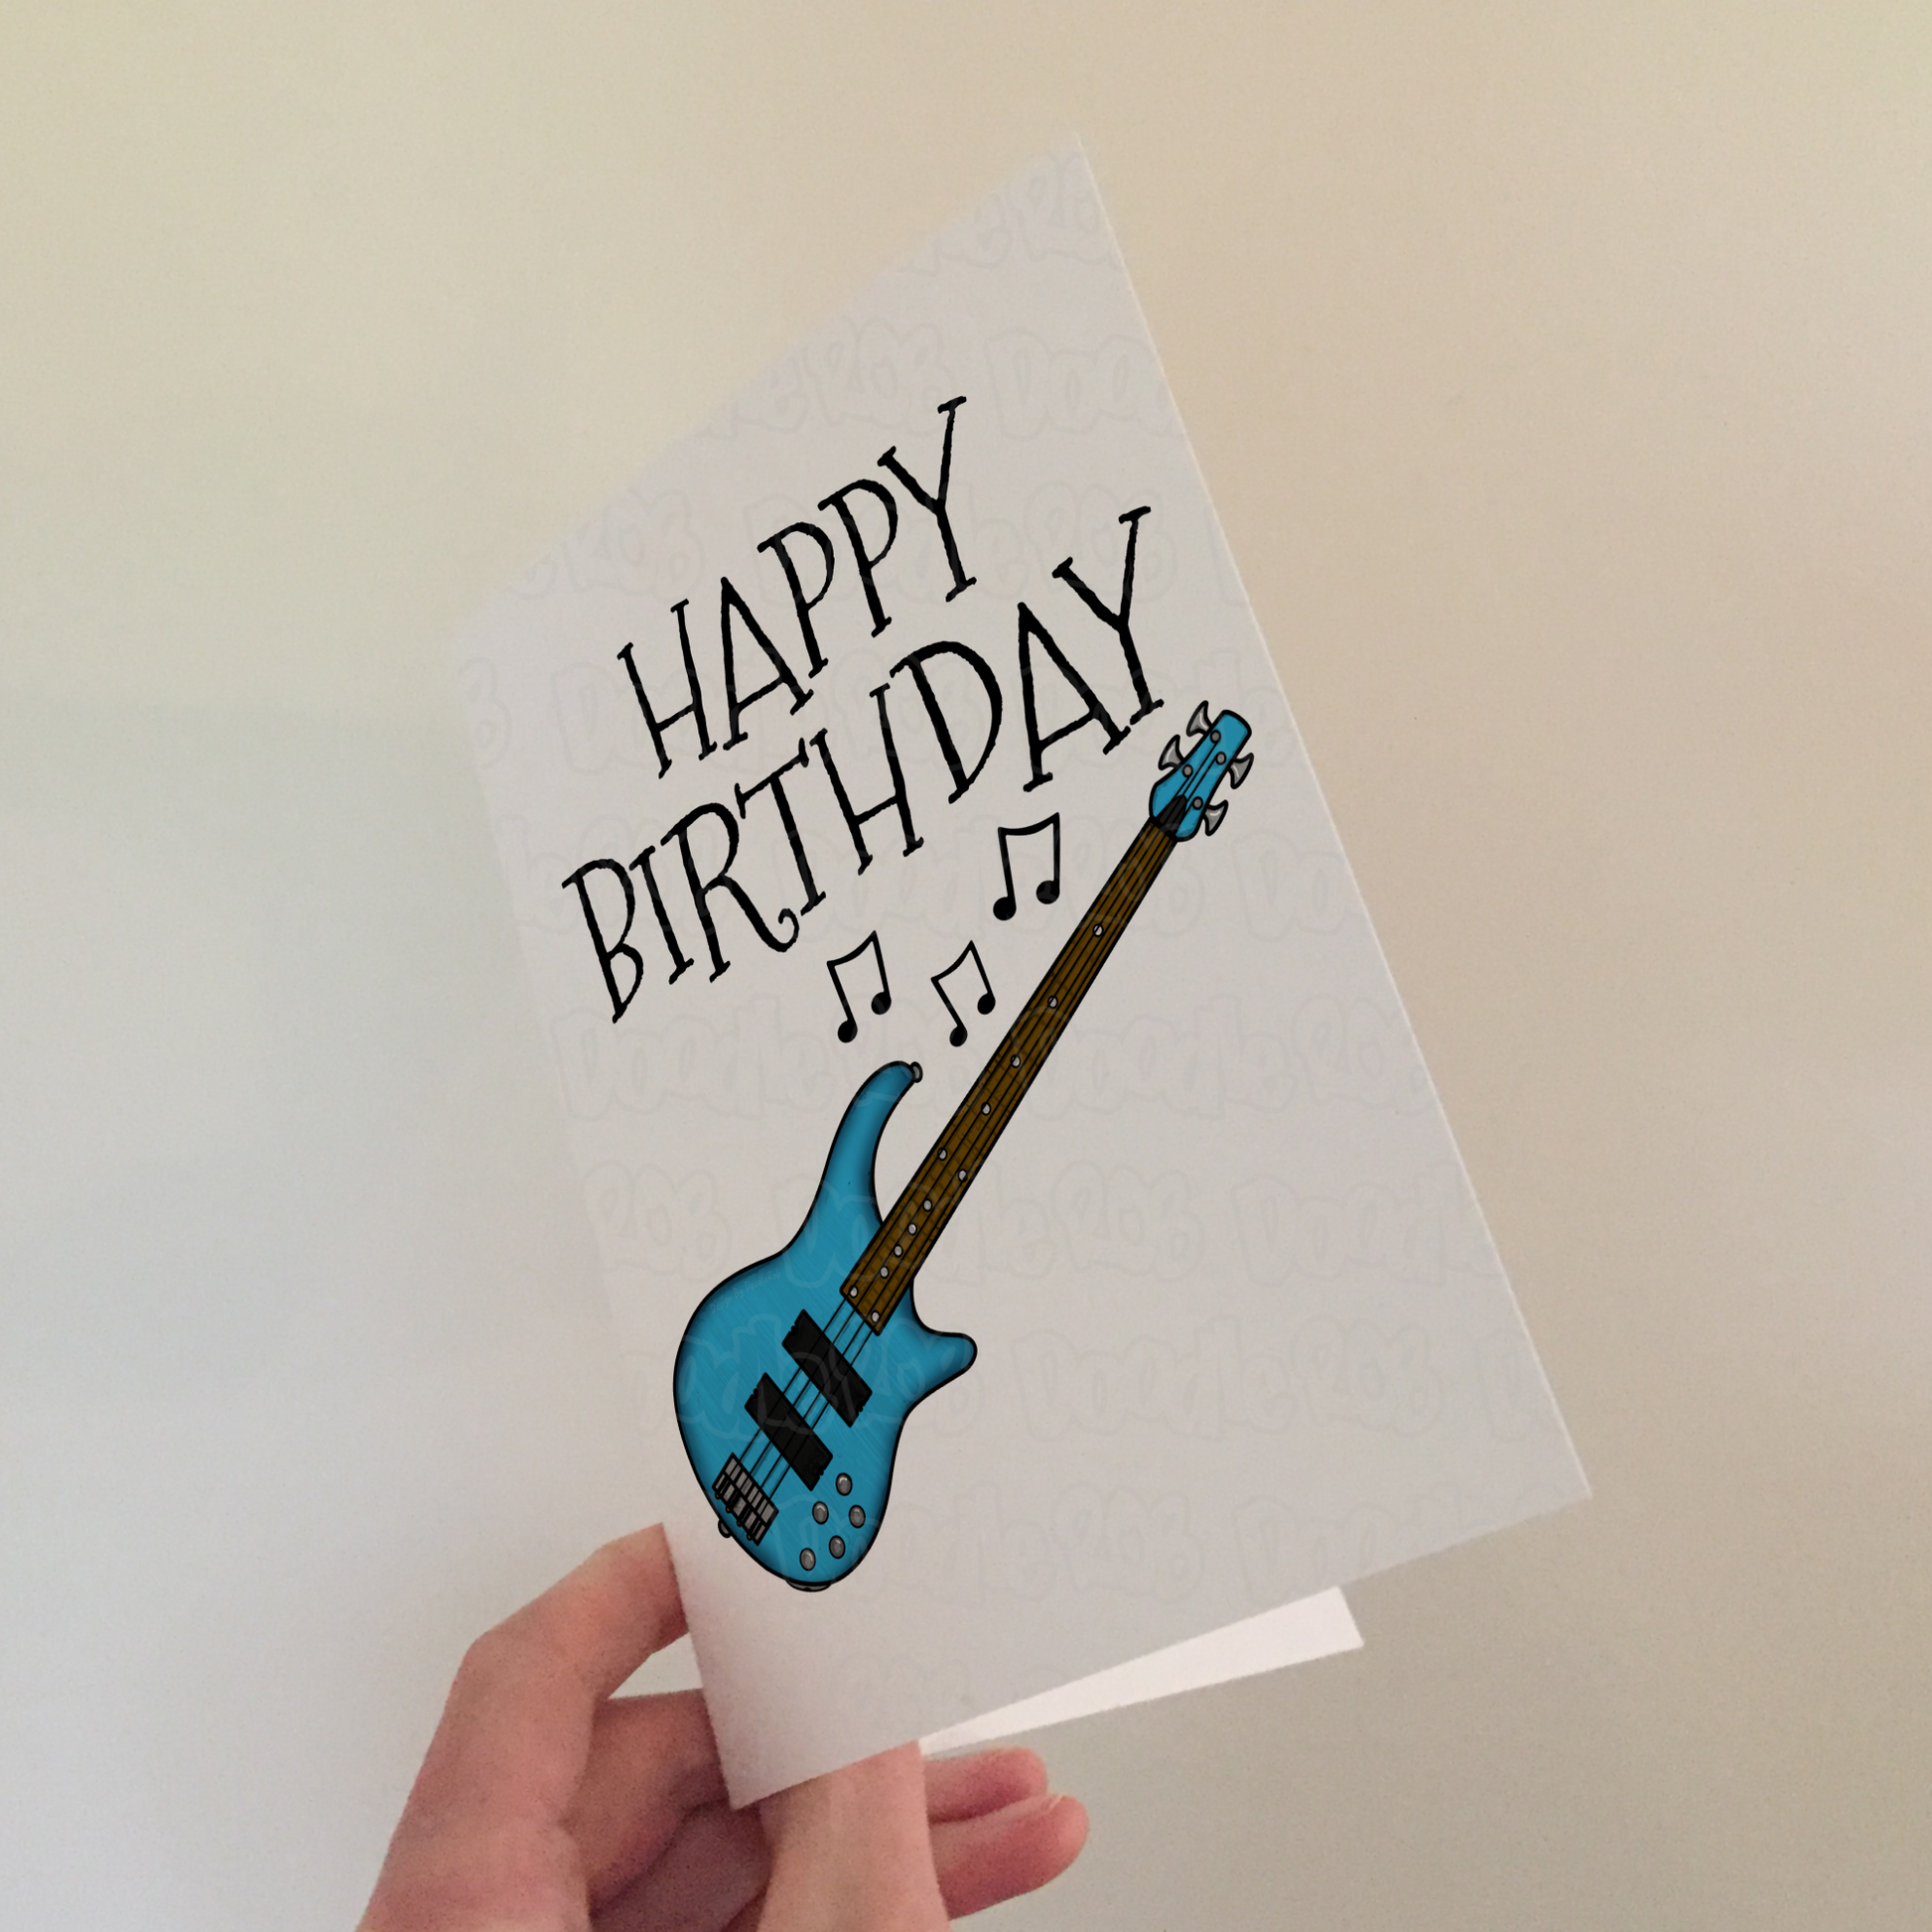 bass guitar birthday